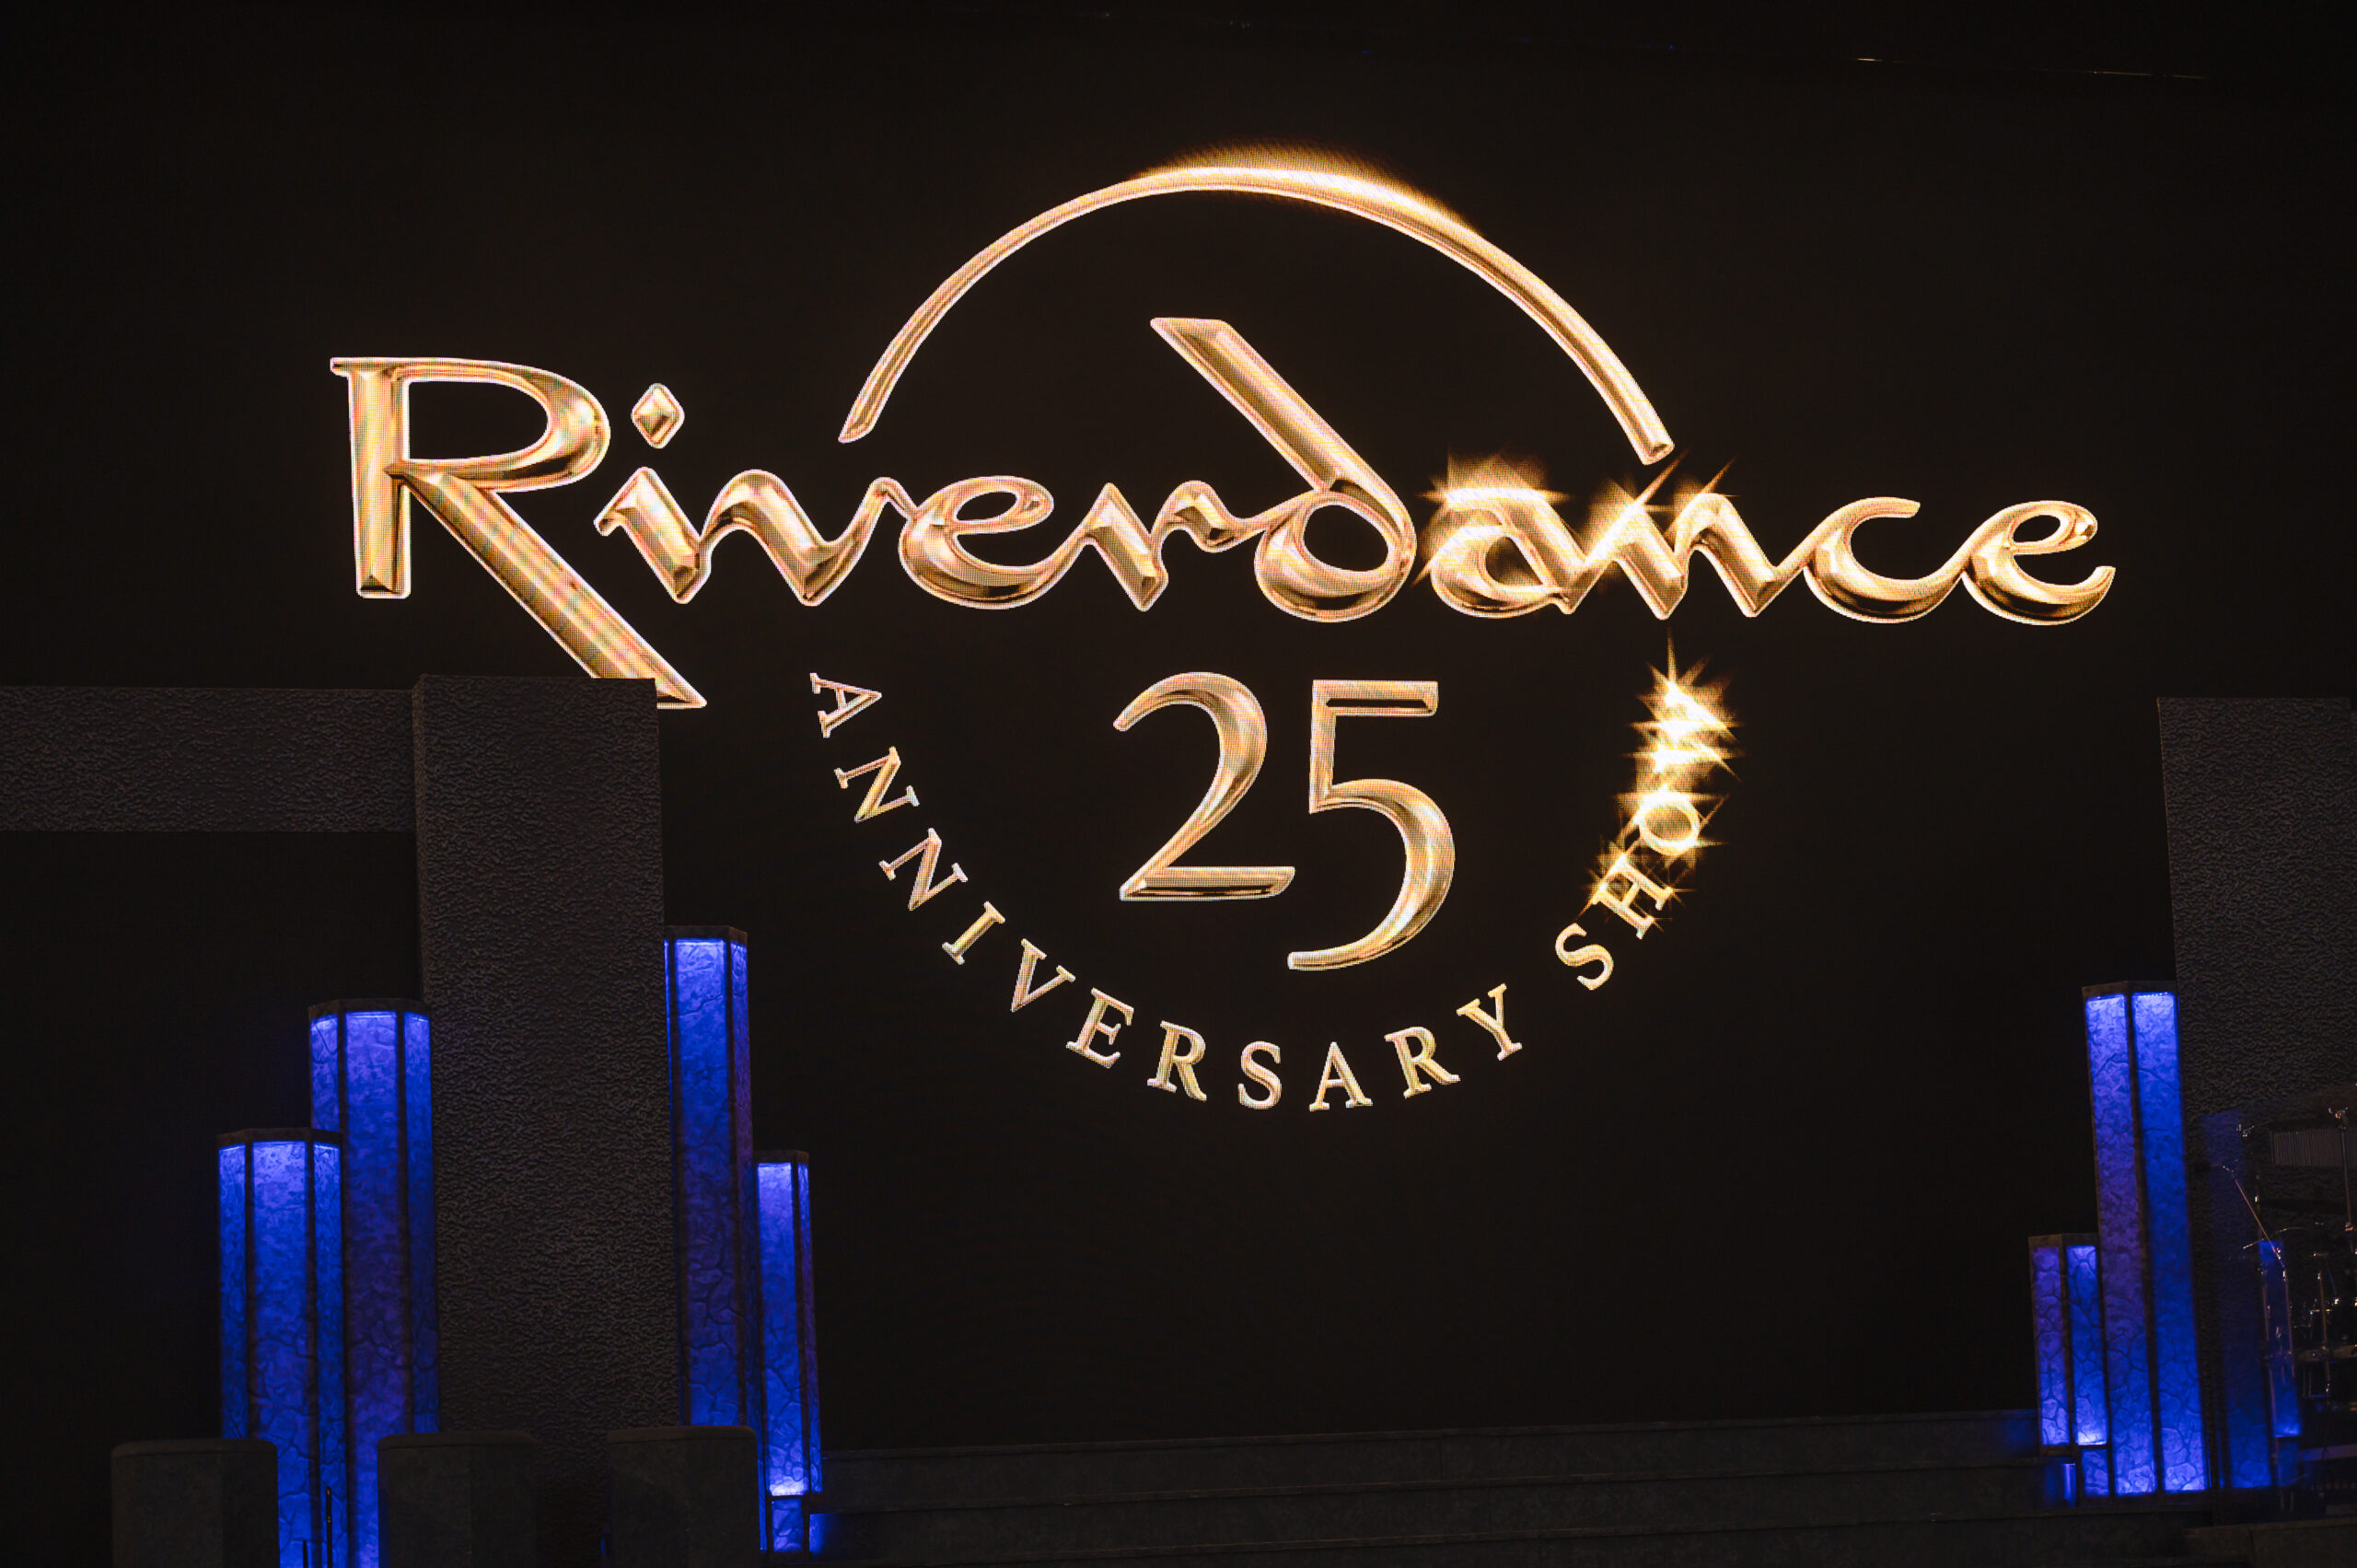 Riverdance 25